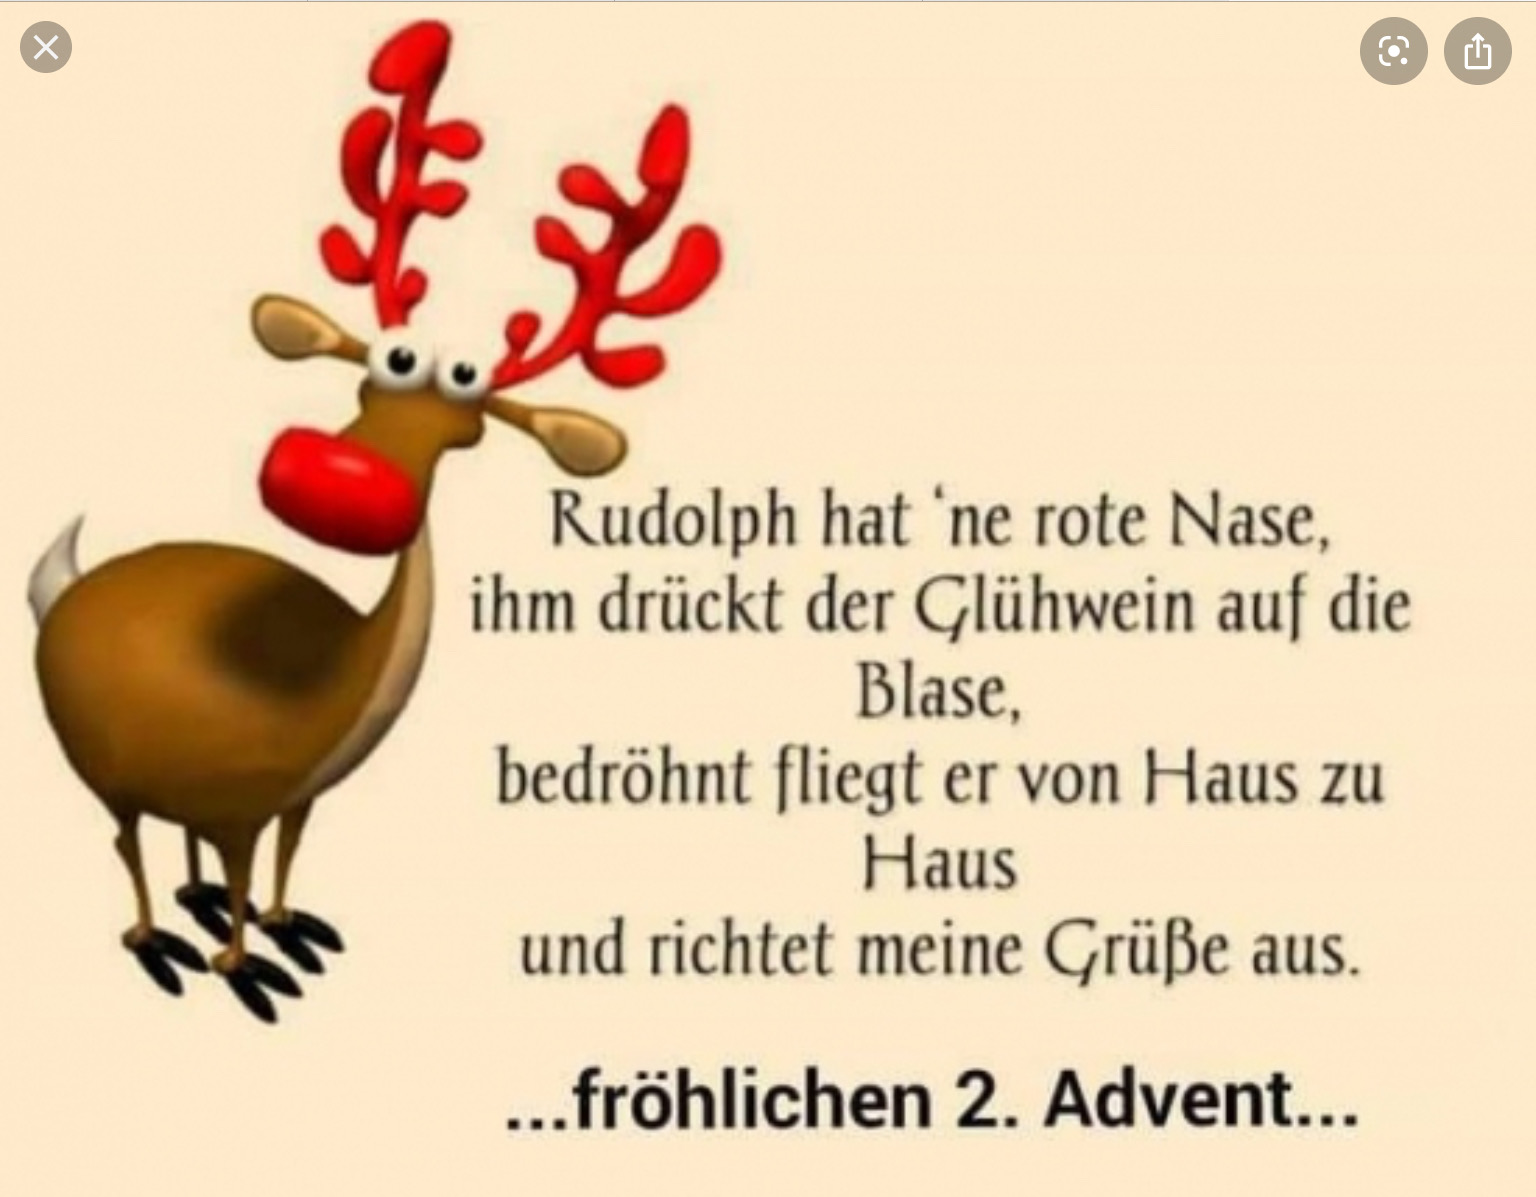 Rudolph_2.Advent.jpg